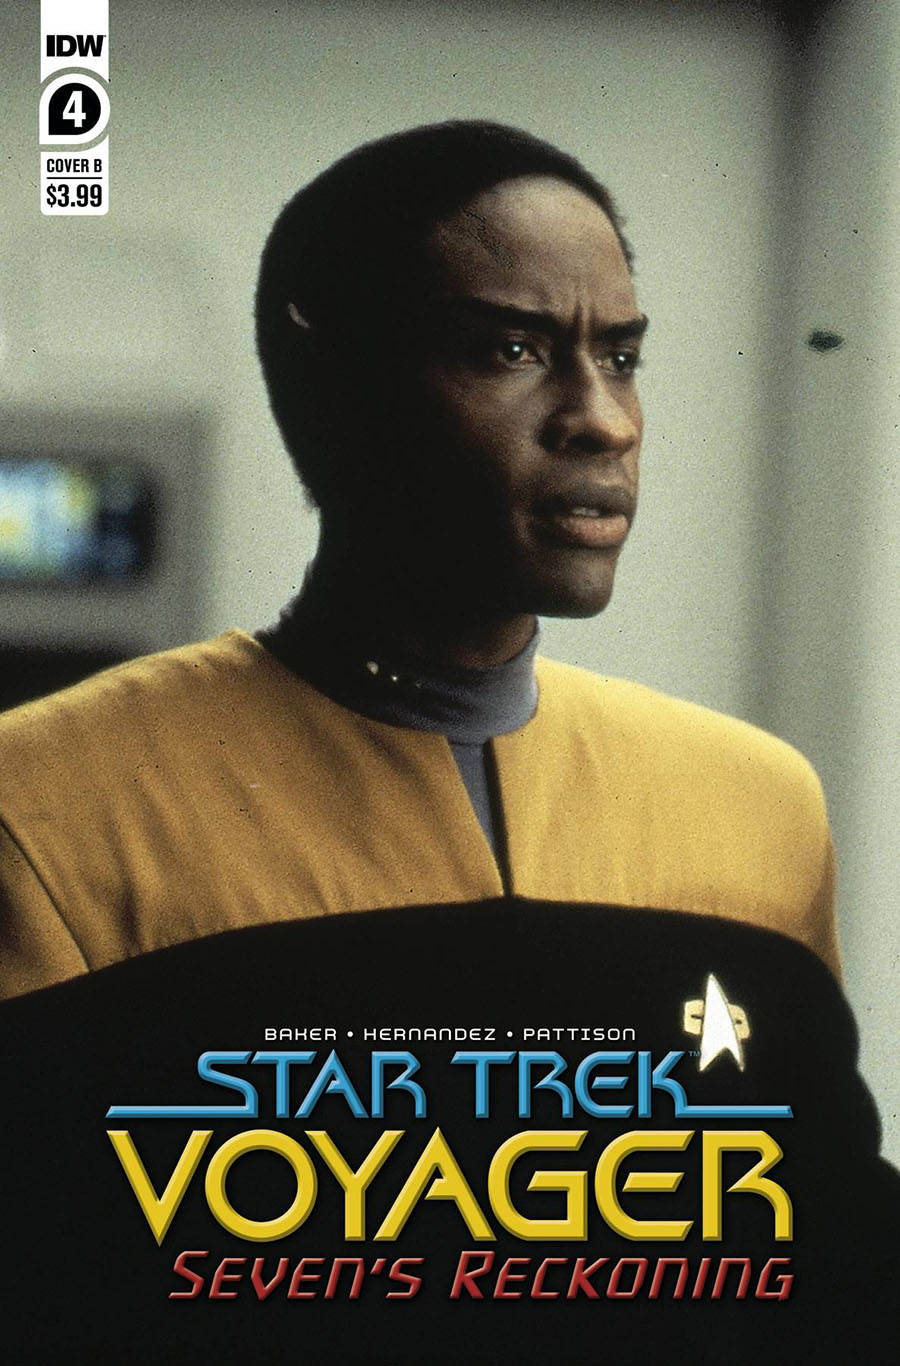 Star Trek Voyager Sevens Reckoning #4 Cover B Variant Photo Cover